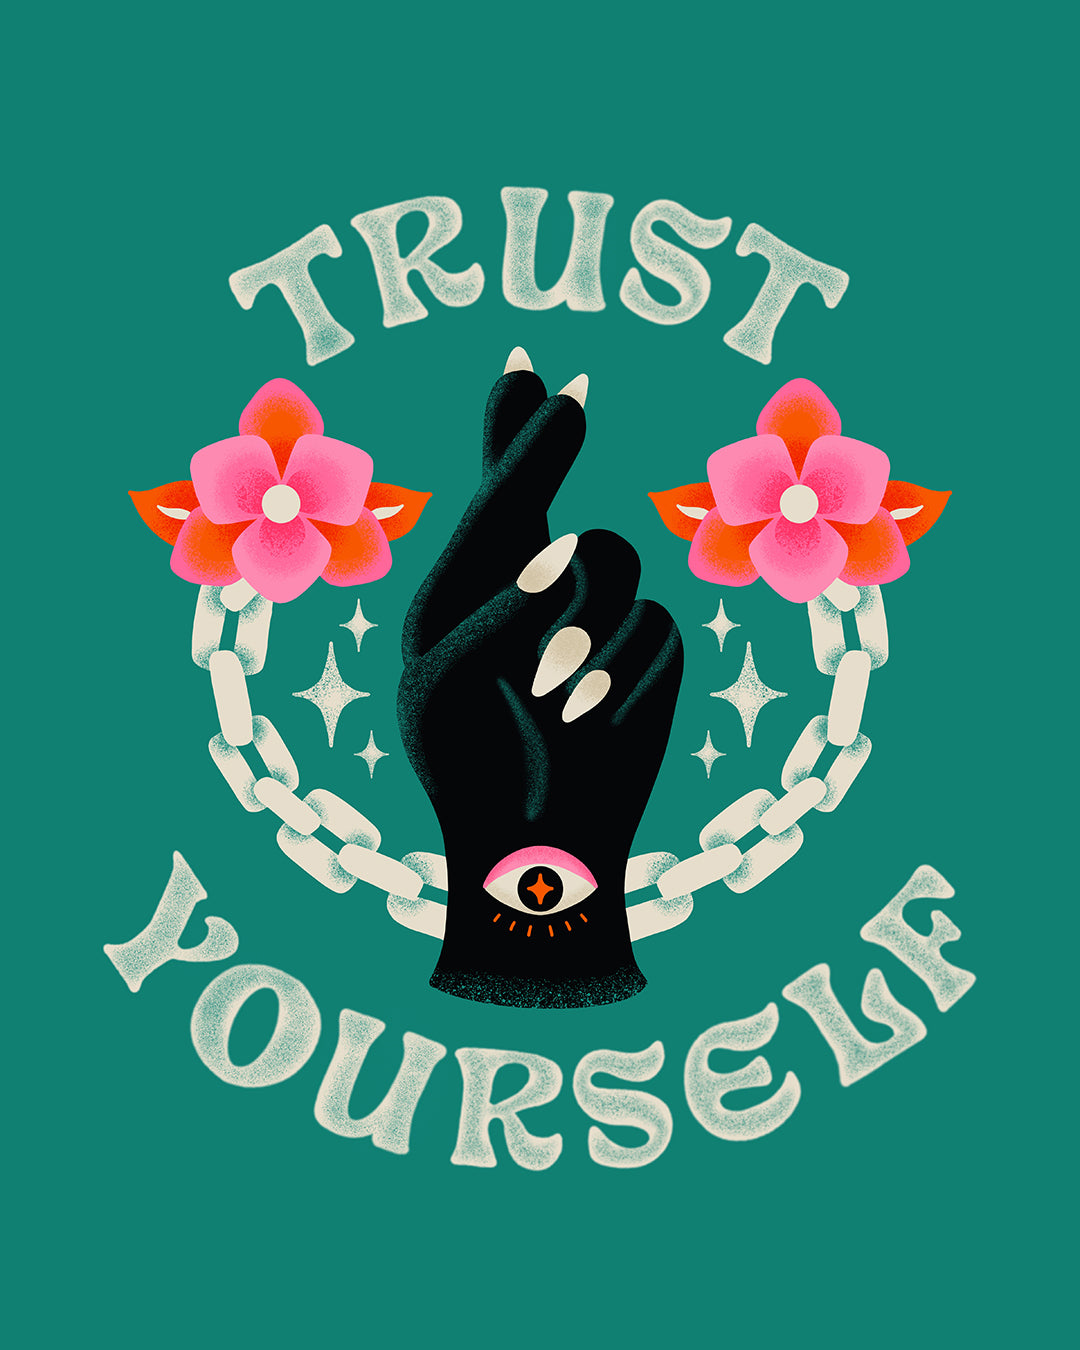 Trust Yourself Art Print